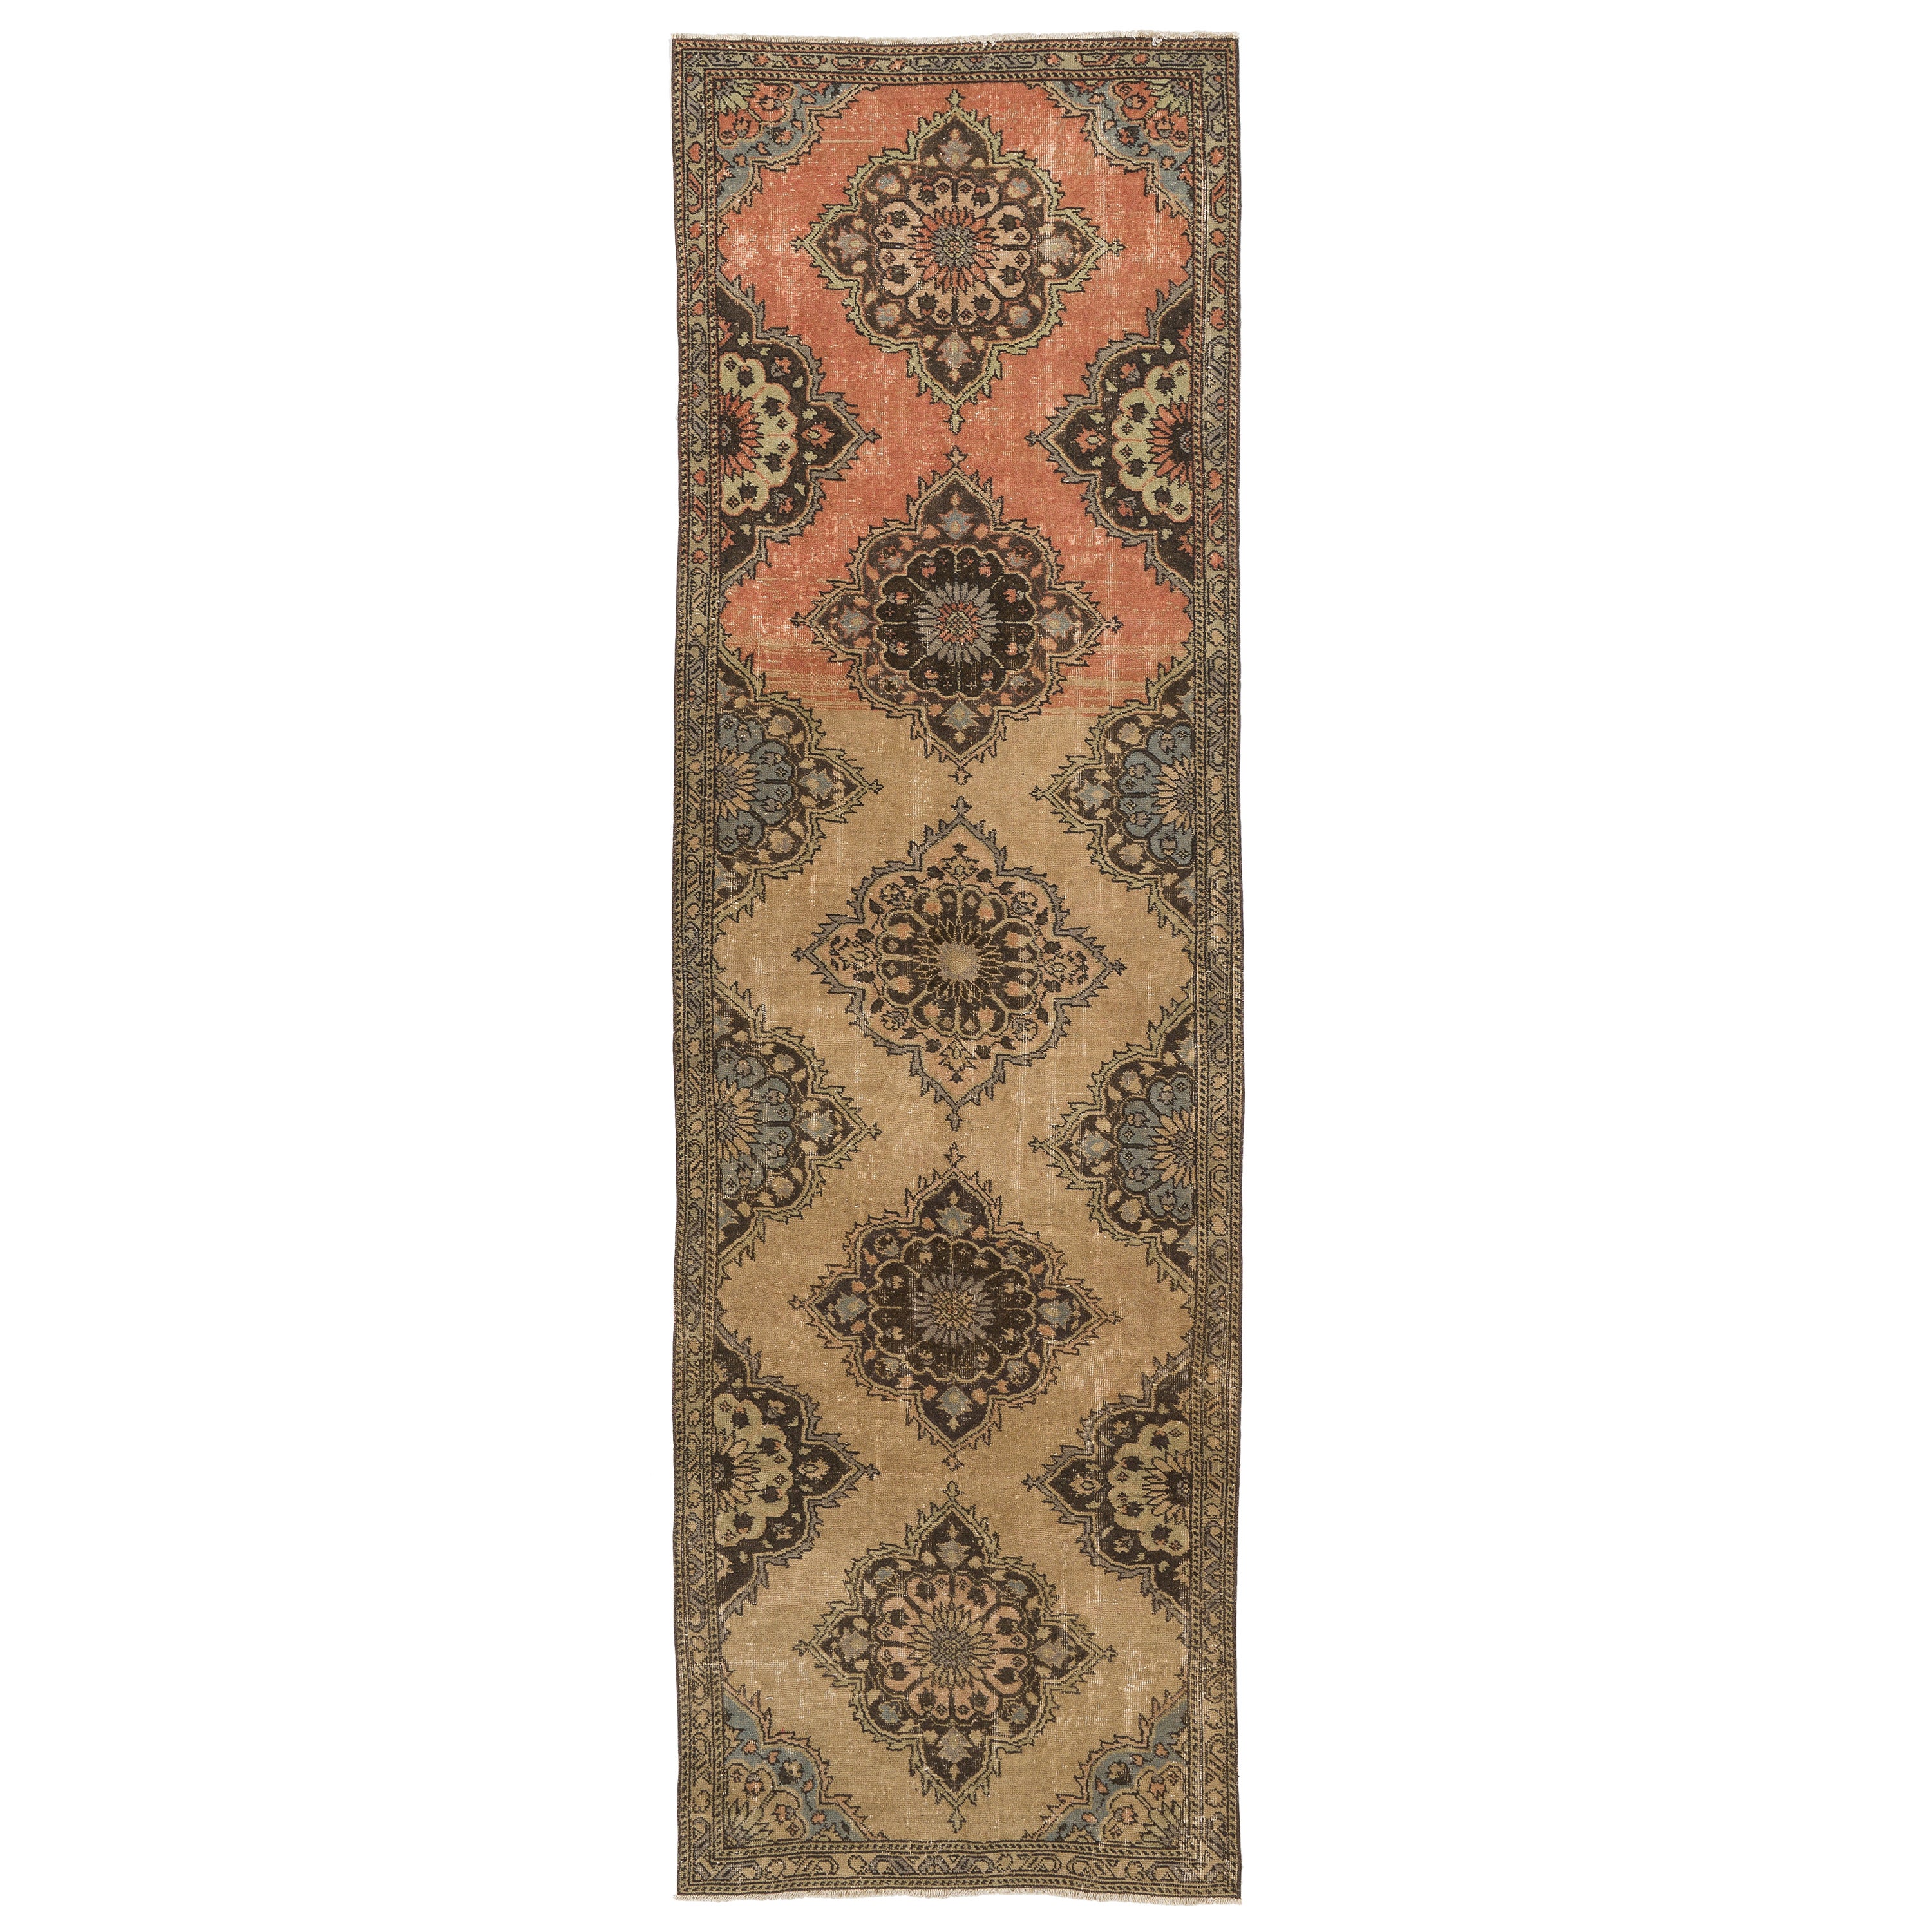 3.6x11.7 Ft Hand-Knotted Turkish Oushak Wool Runner Rug. Vintage Corridor Carpet